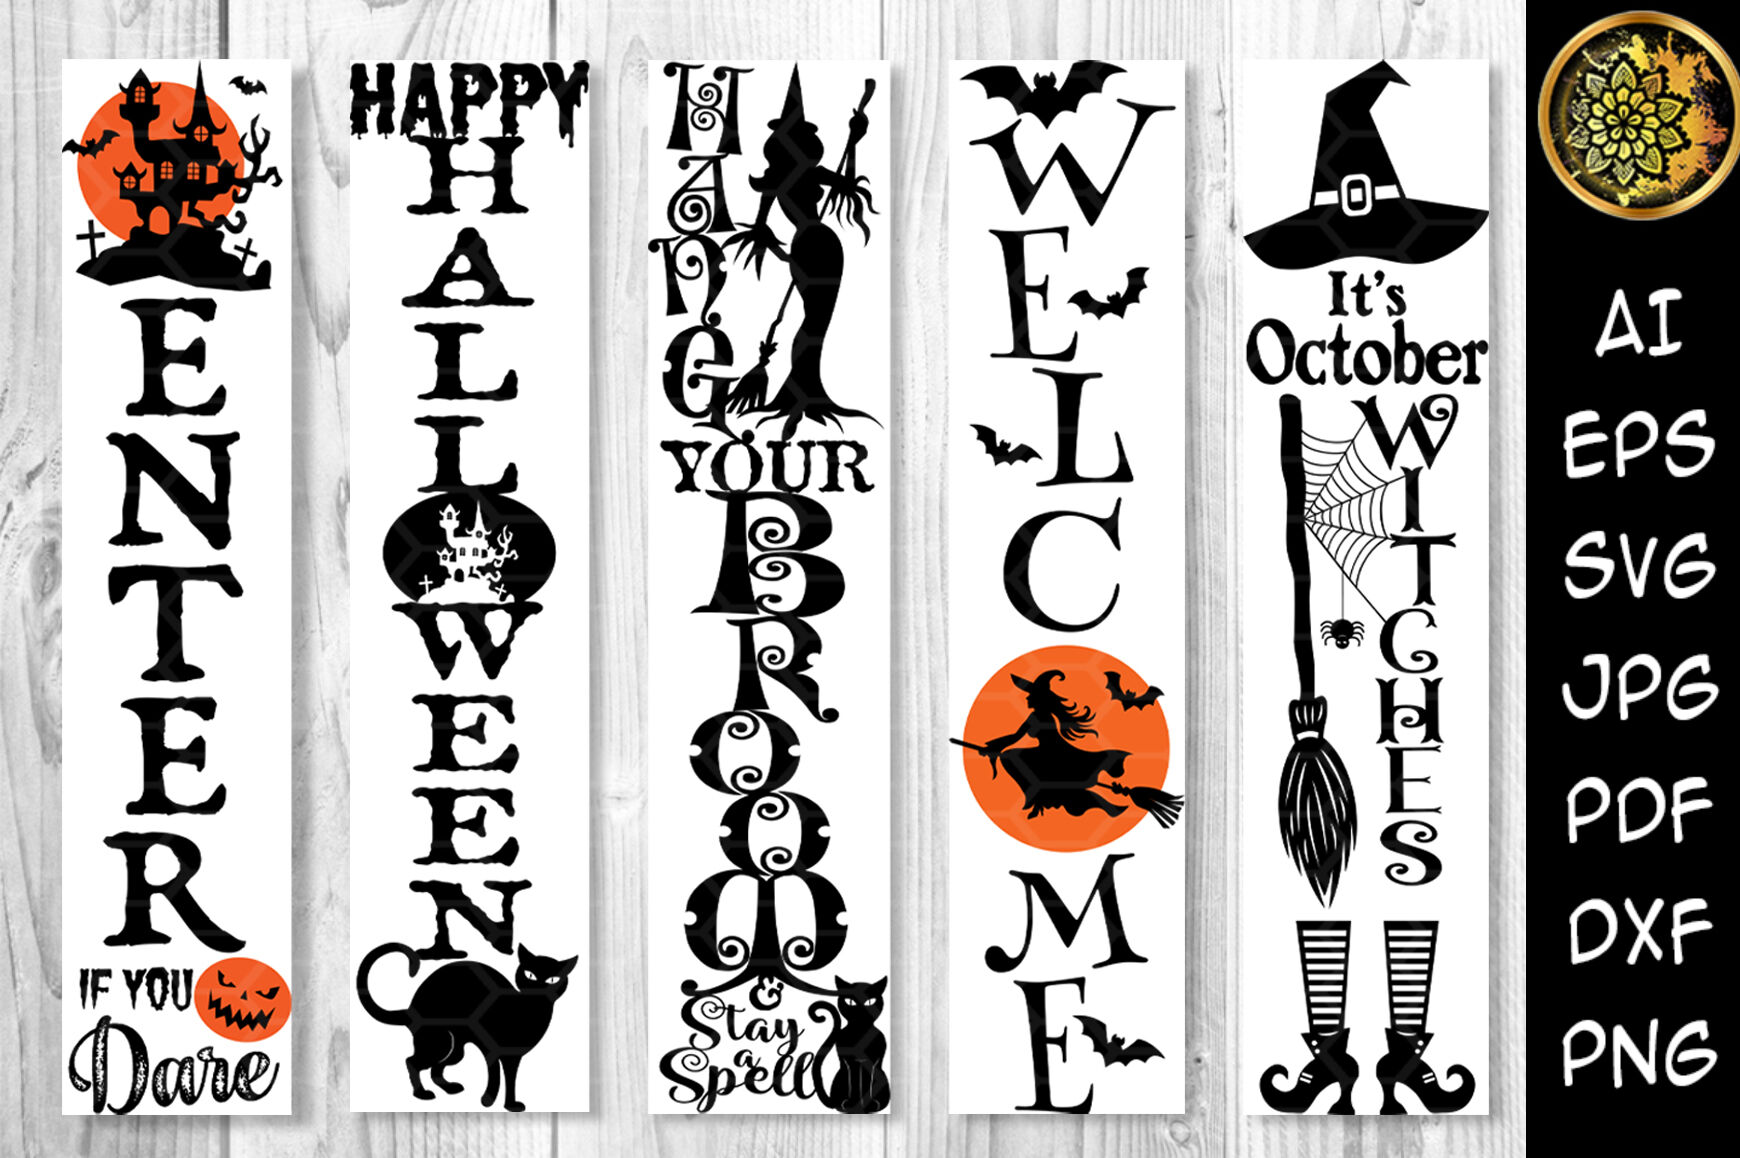 Halloween Porch Sign SVG